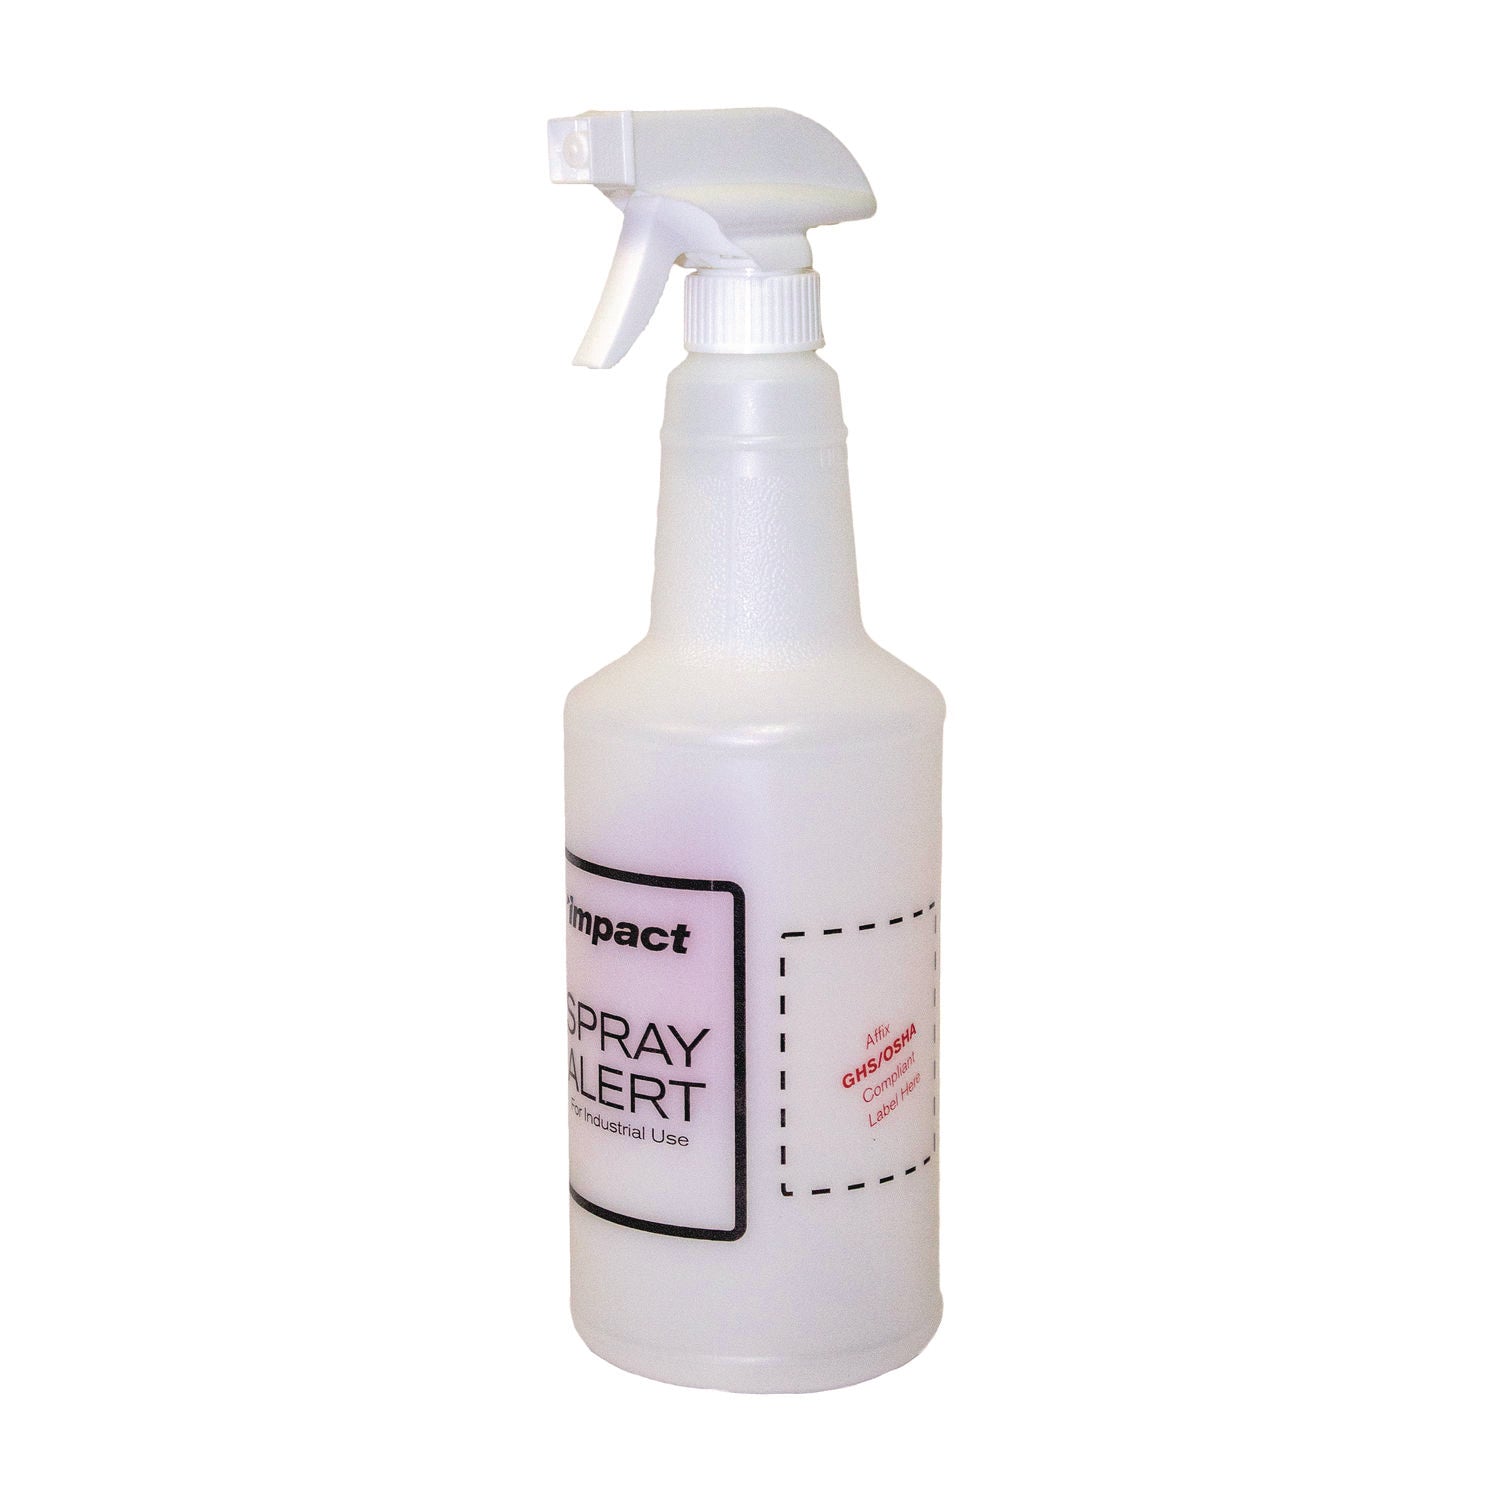 Spray Alert System, 32 oz, Natural with White/White Sprayer, 24/Carton - 3